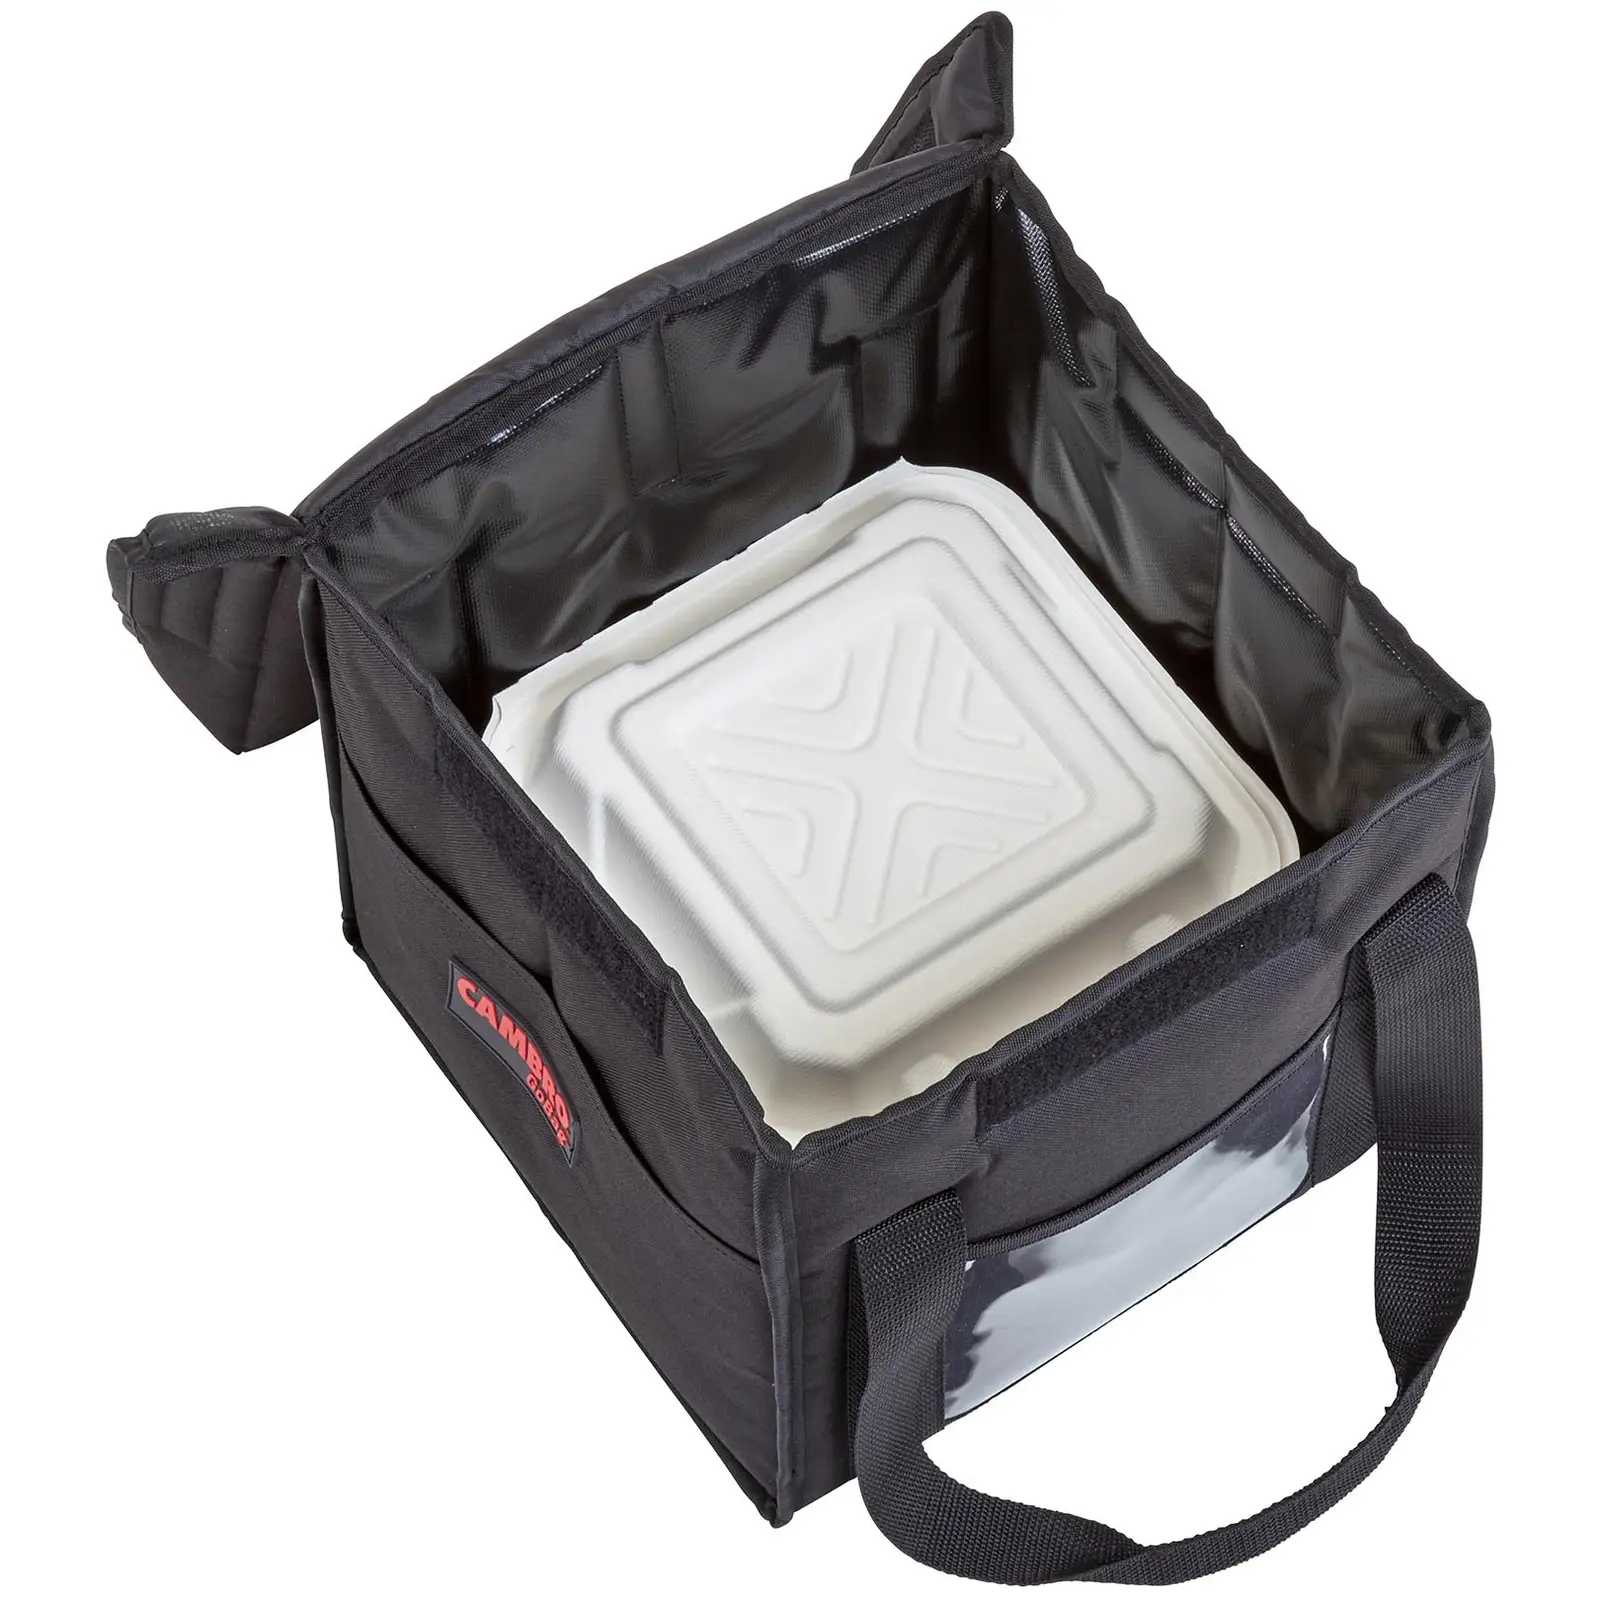 Food Delivery Bag - 25.5 x 25.5 x 28 cm - Black - foldable